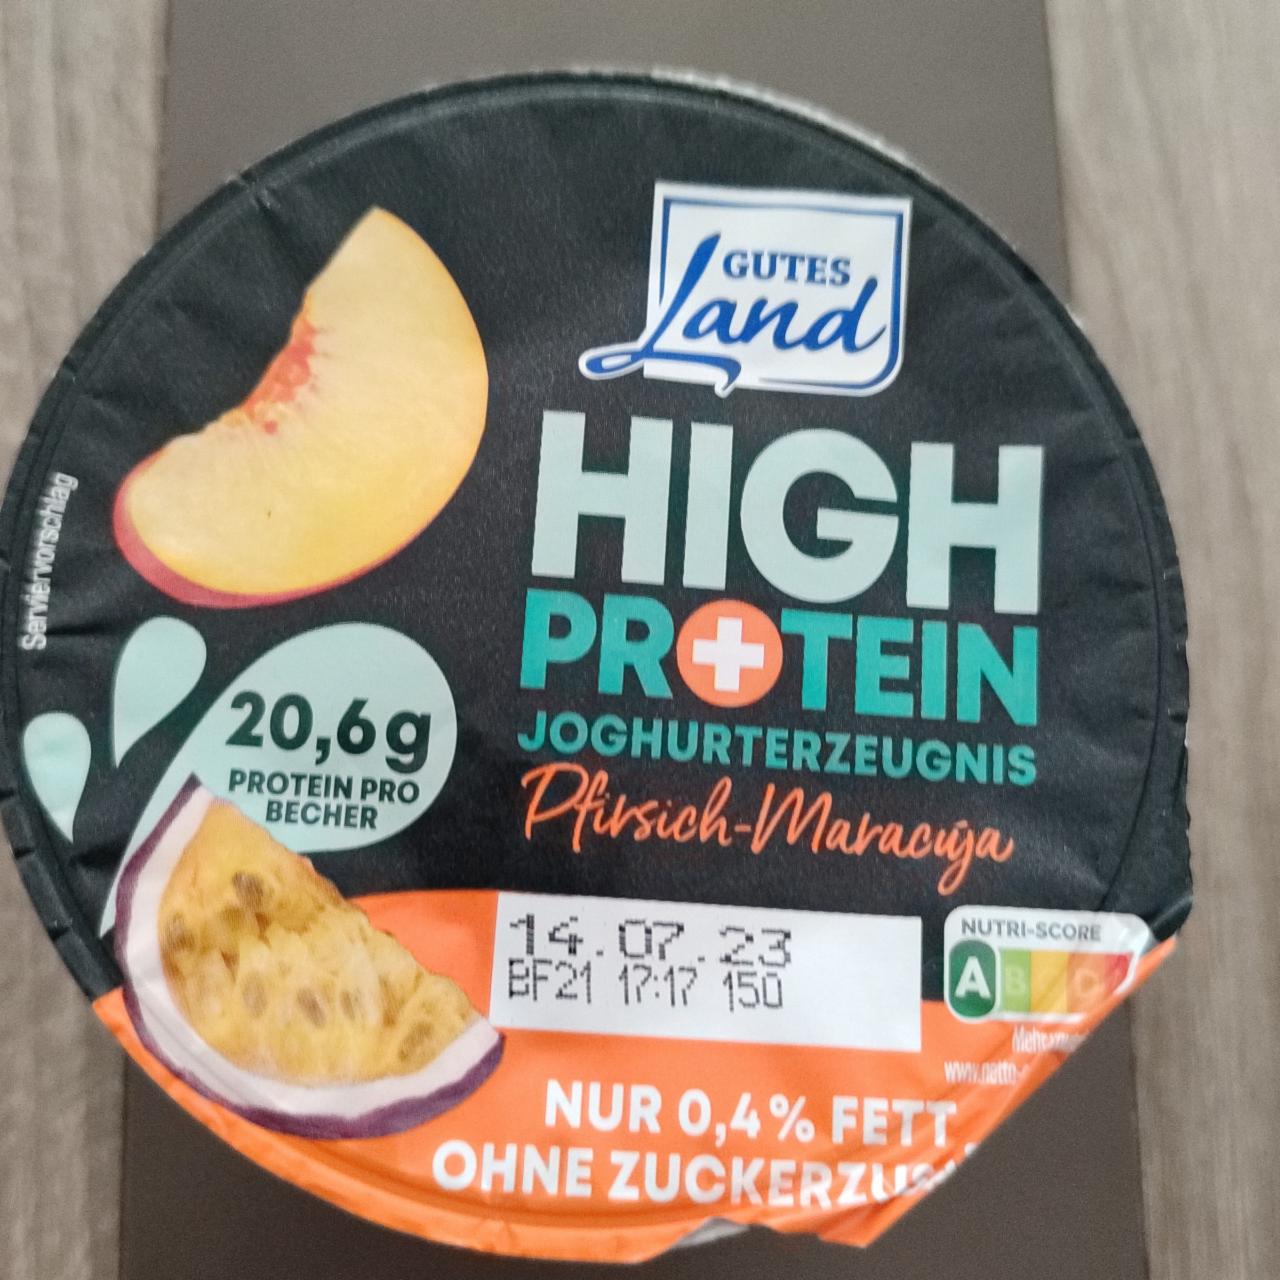 Фото - Йогурт протеиновый персик маракуйя High Protein joghurterzeugnis Pfirsich-Maracuja Gutes Land